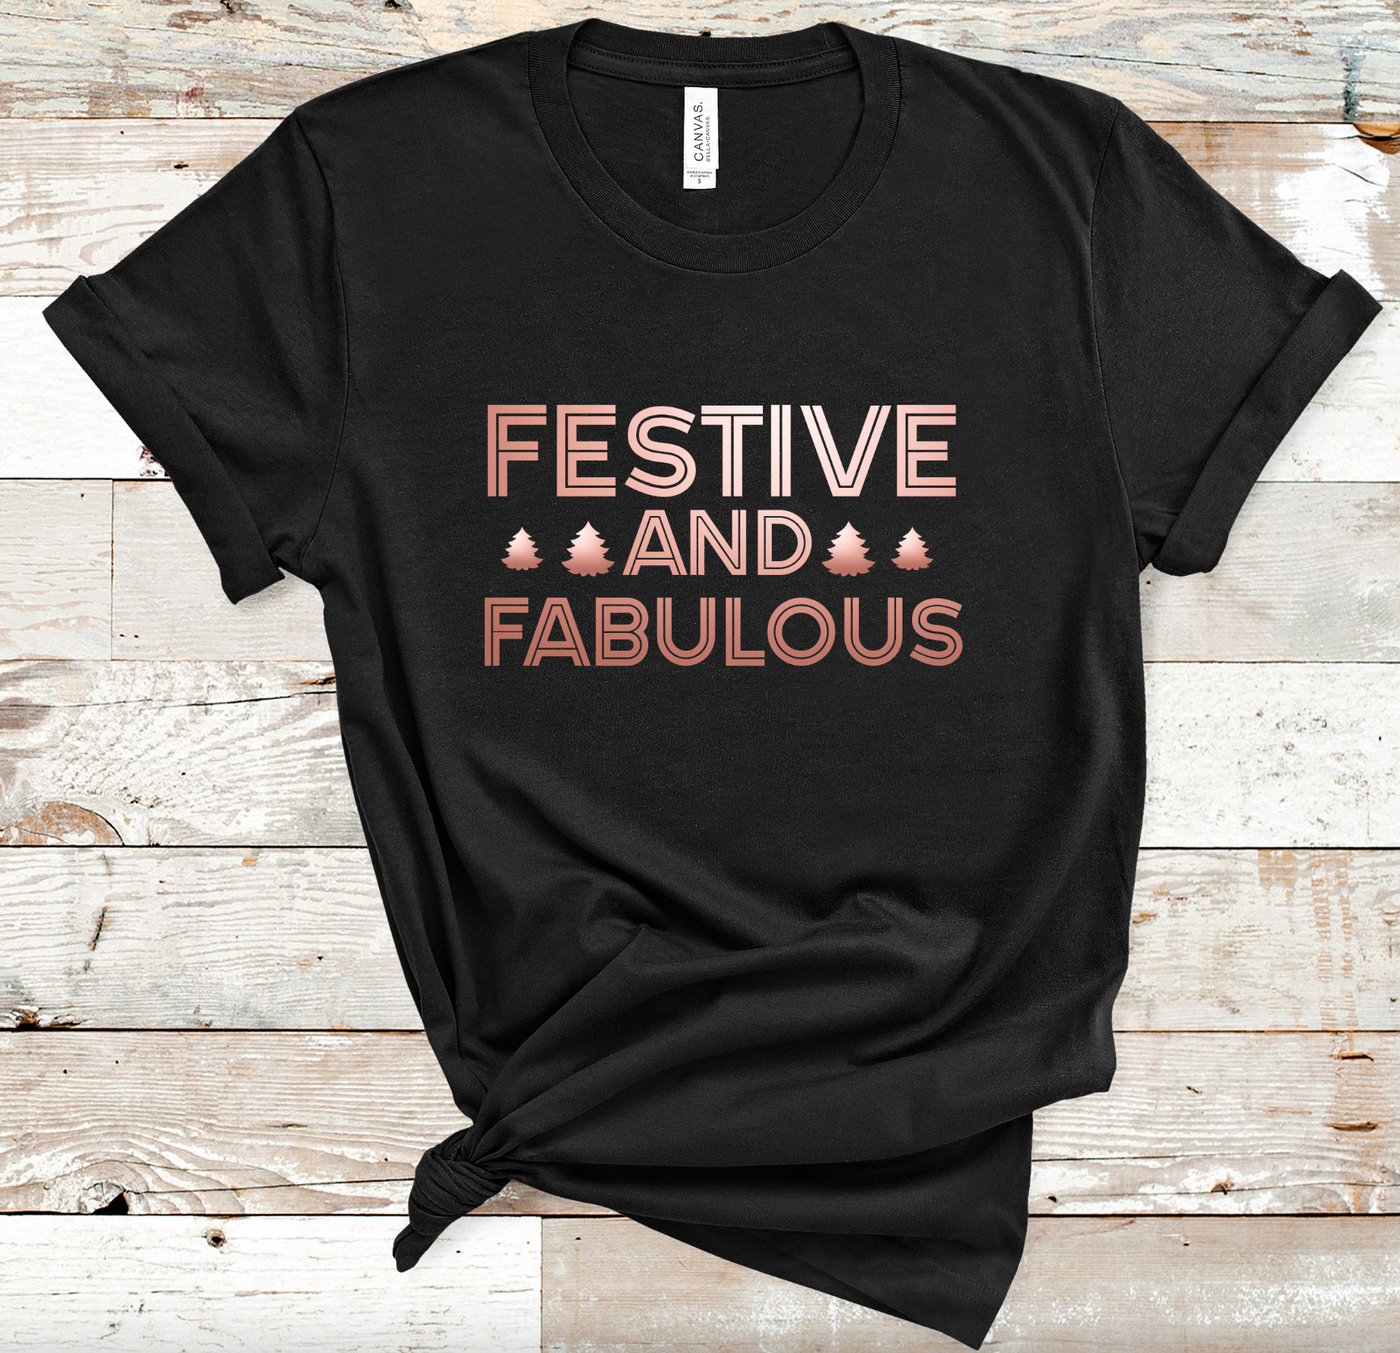 Festive and Fabulous Tee